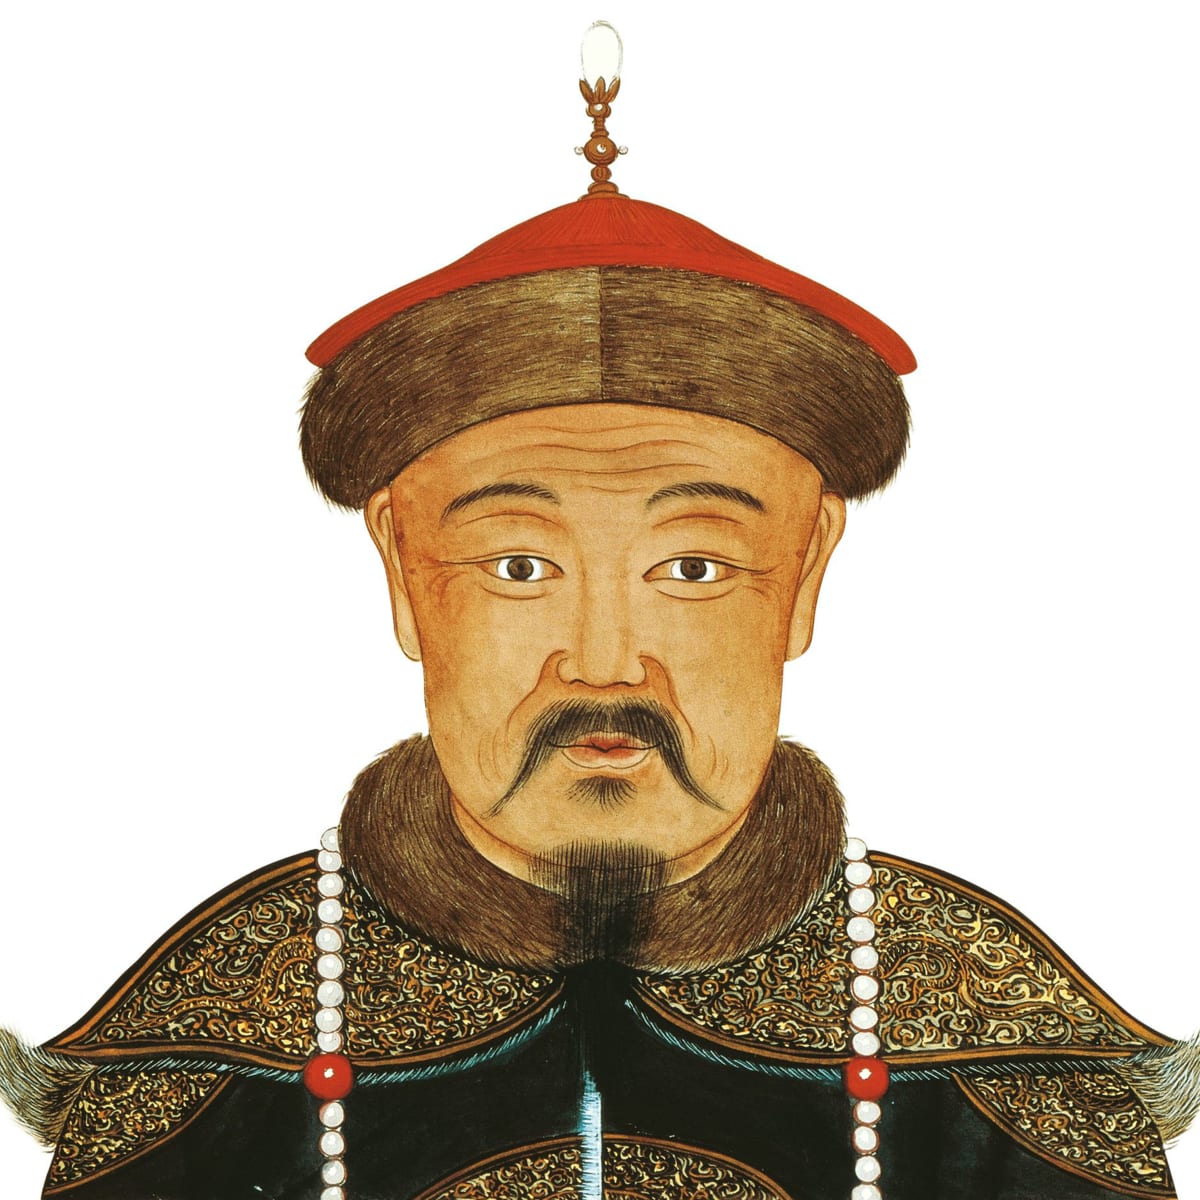 Kublai Khan Death Acplishments Marco Polo Biography